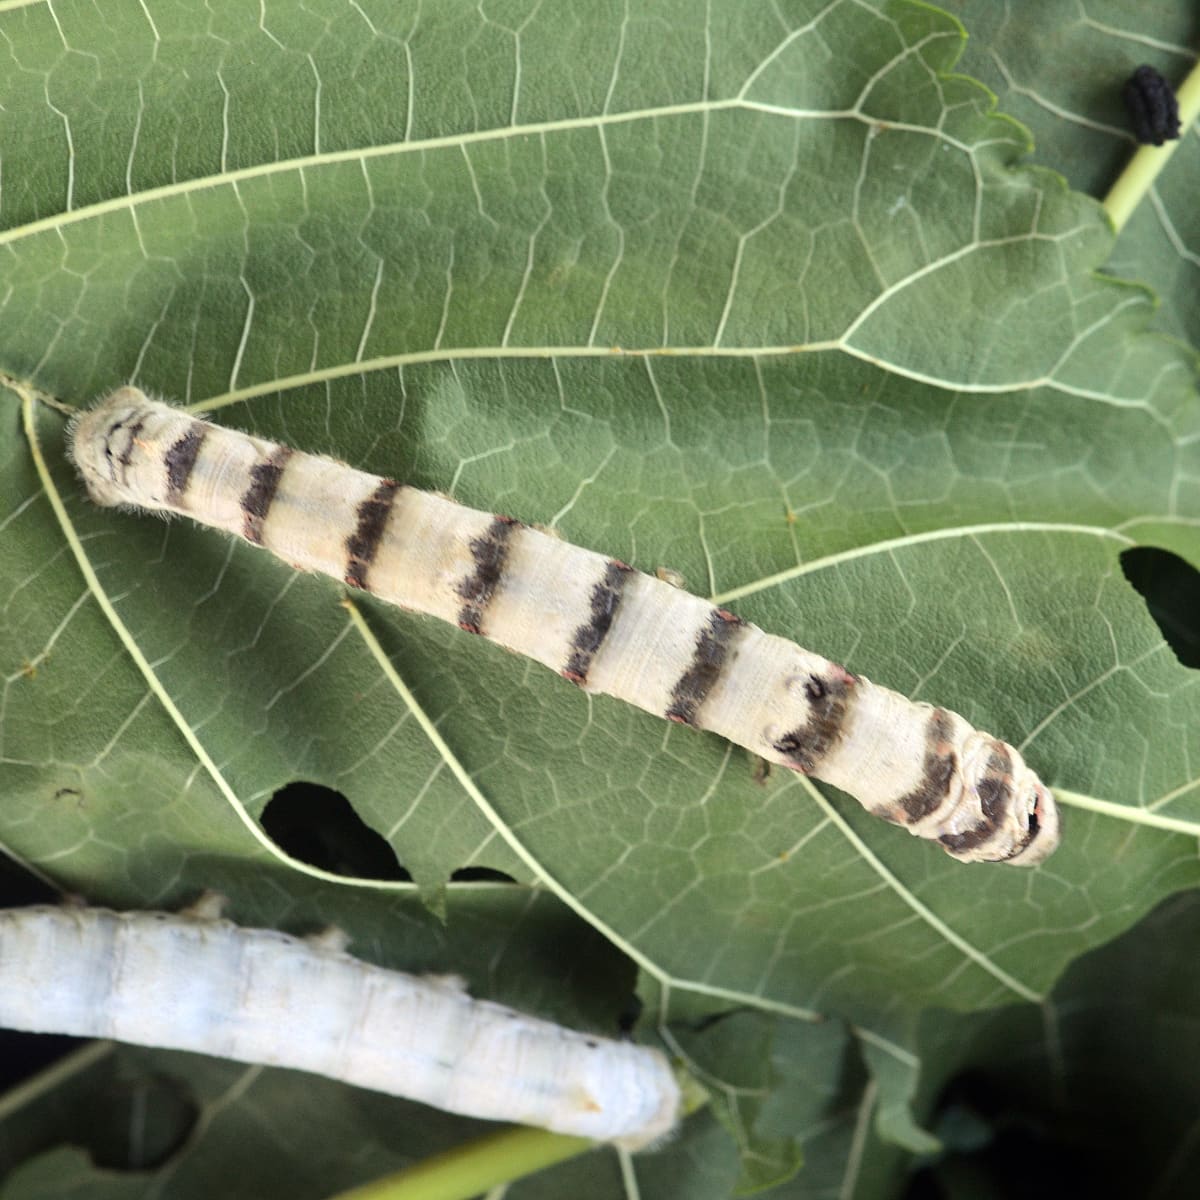 Breeding and Raising Silkworms - PetHelpful